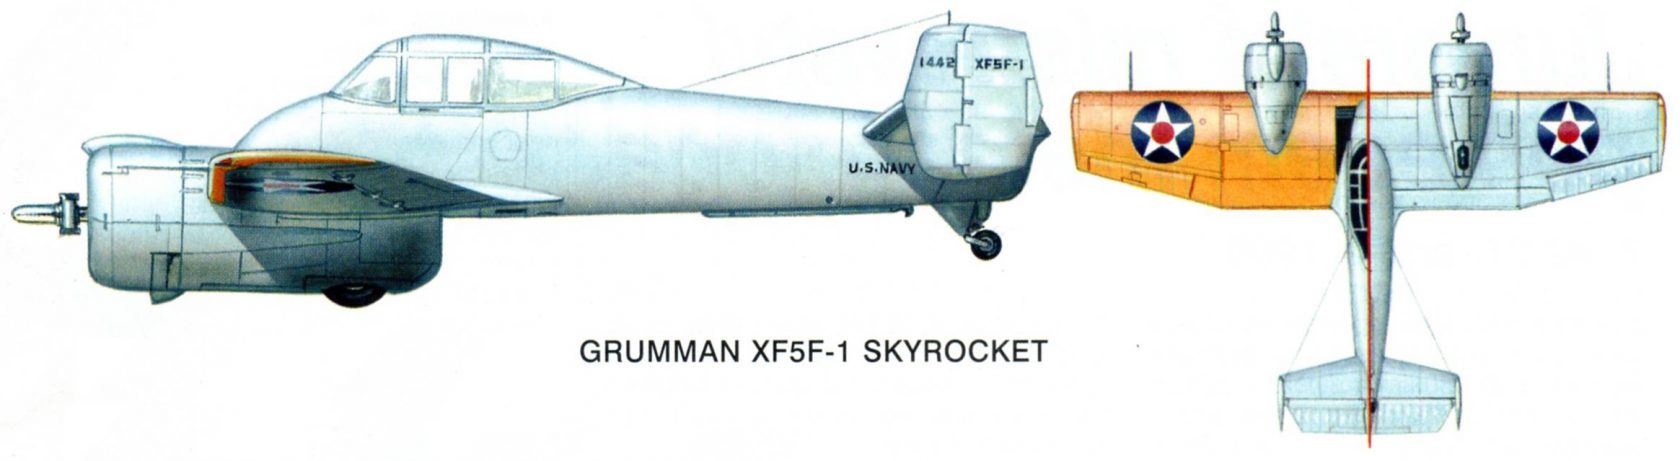 вариант окраски прототипа палубного истребителя Grumman XF5F-1 Skyrocket